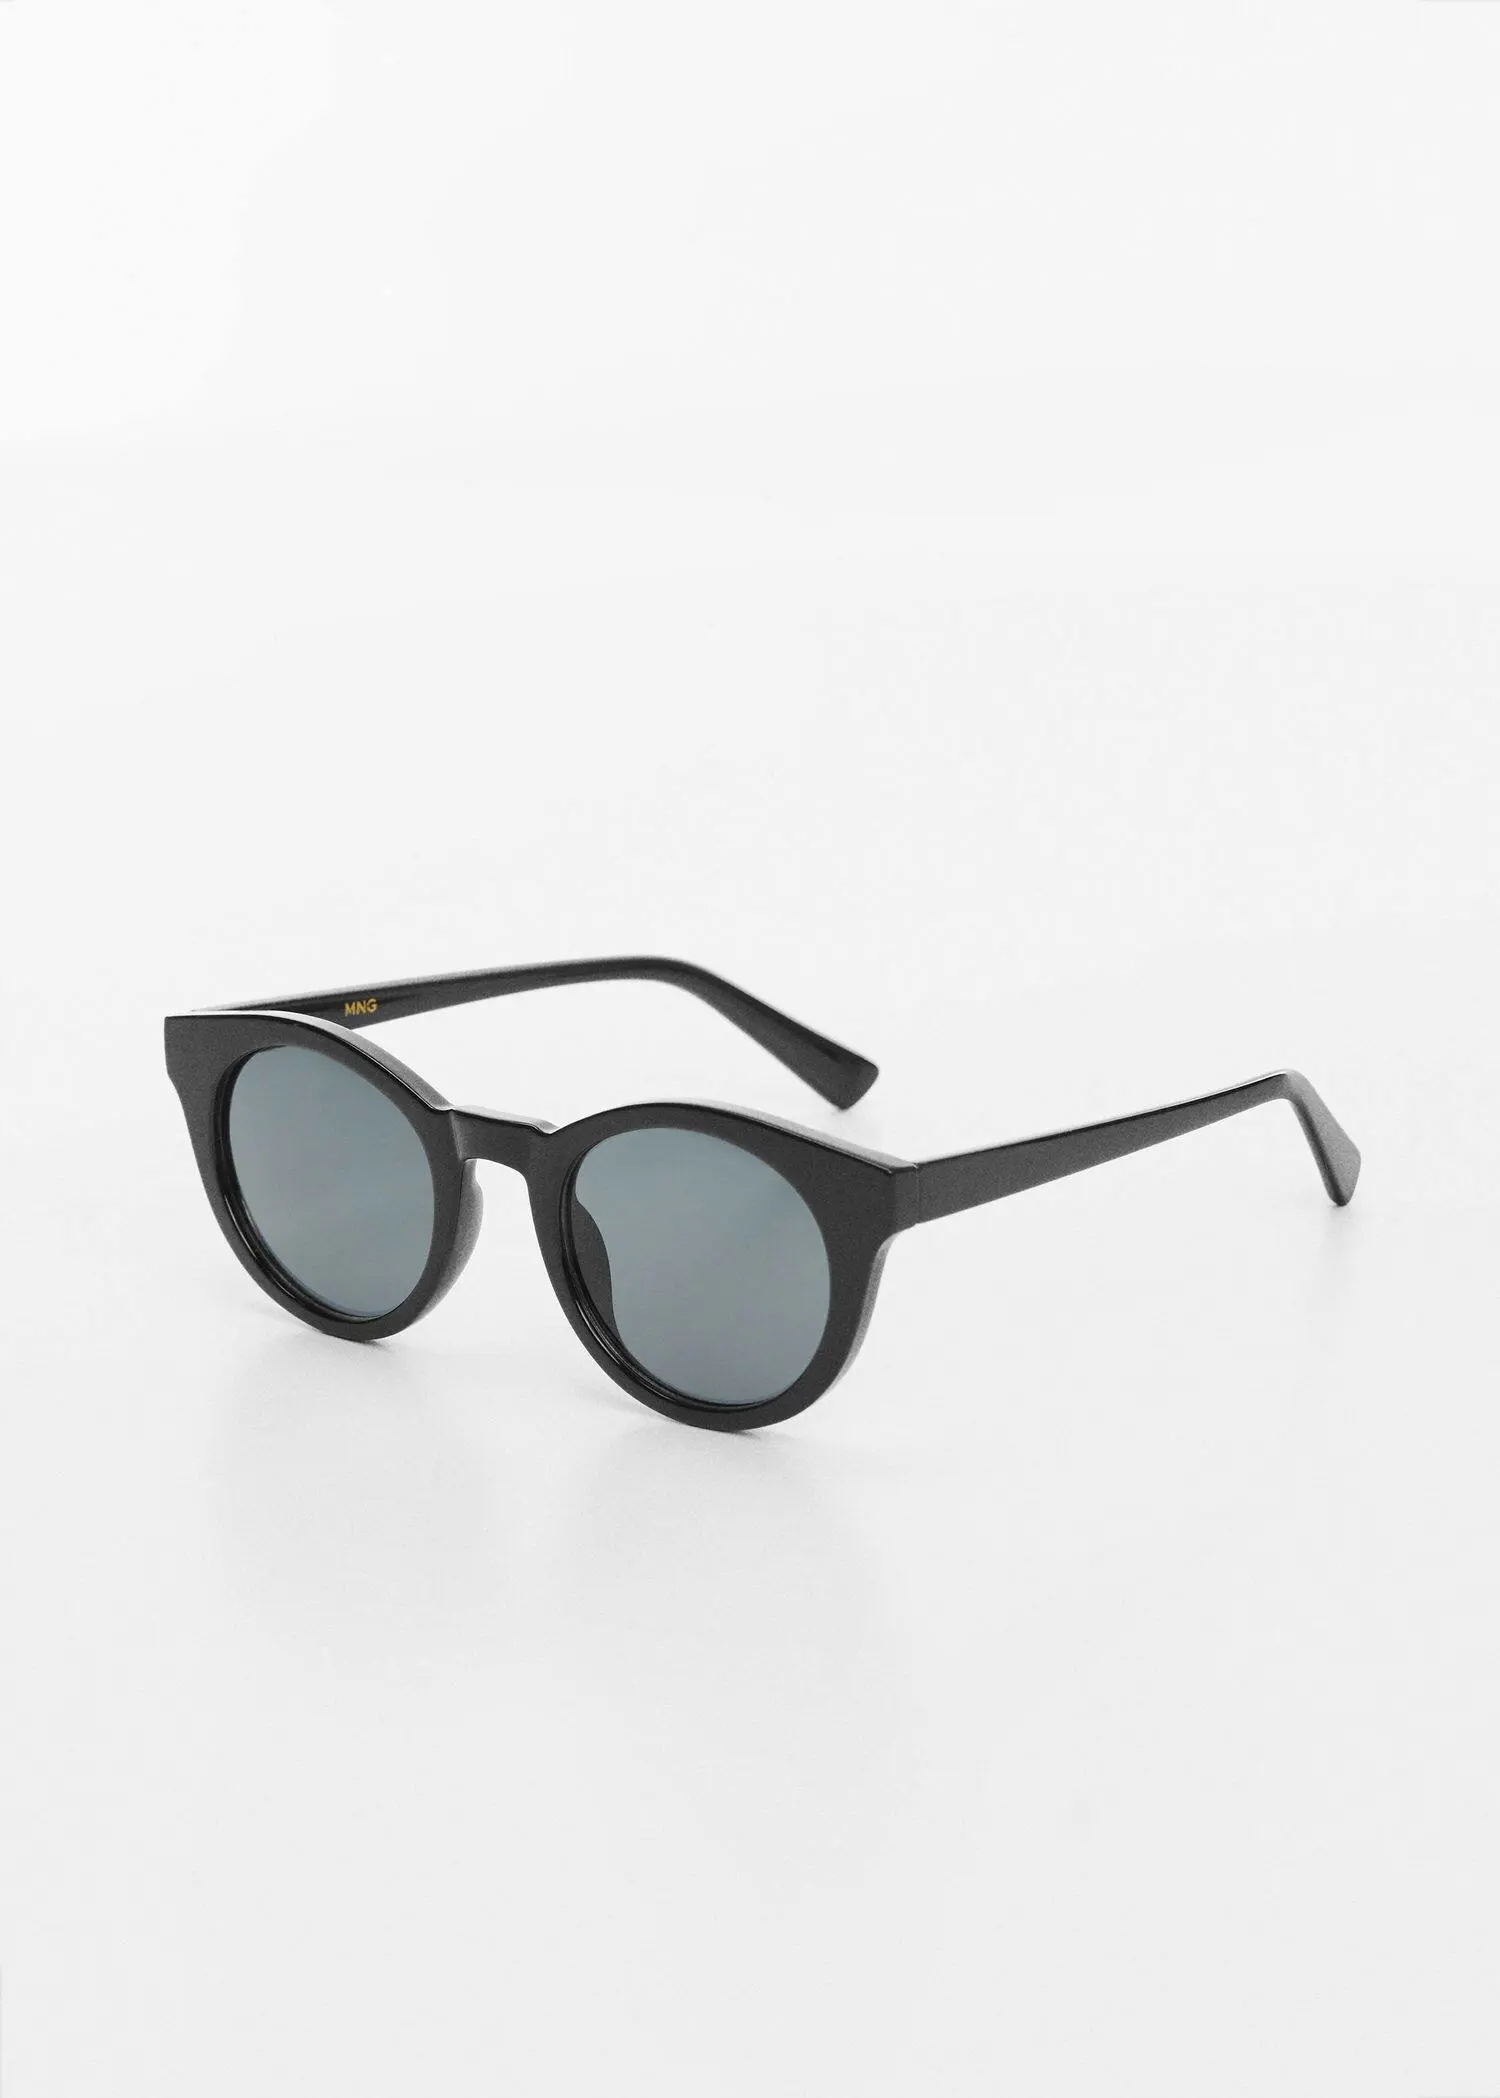 Mango Retro style sunglasses. 1